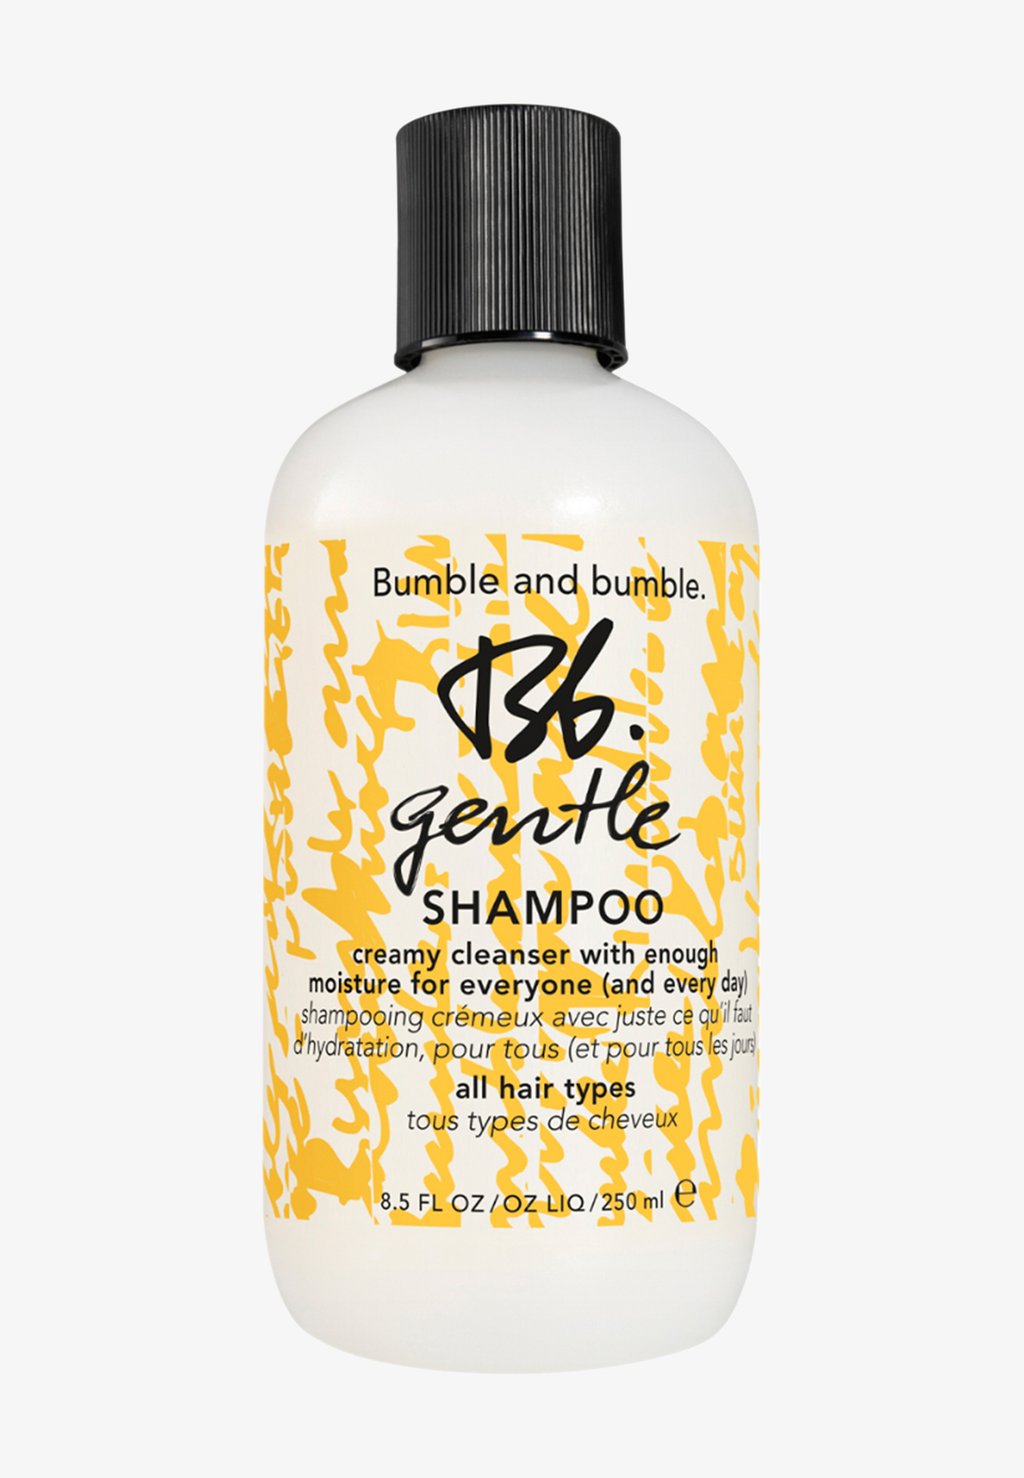 Шампунь Gentle Shampoo Bumble and bumble